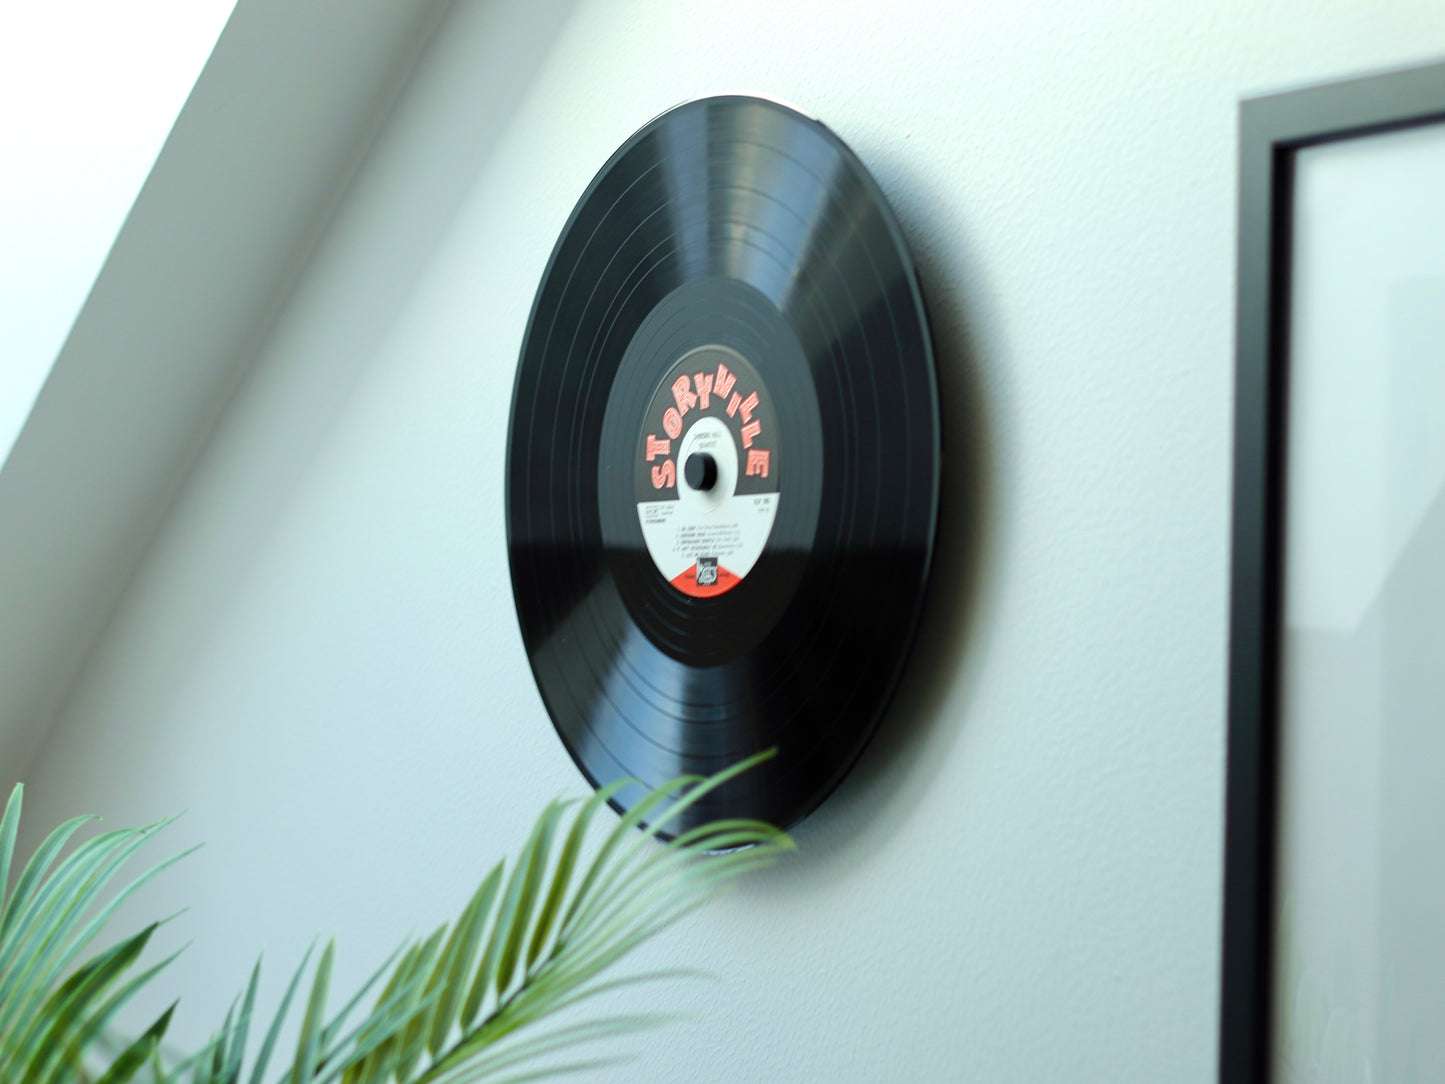 Vinyl hanger - Self-adhesive